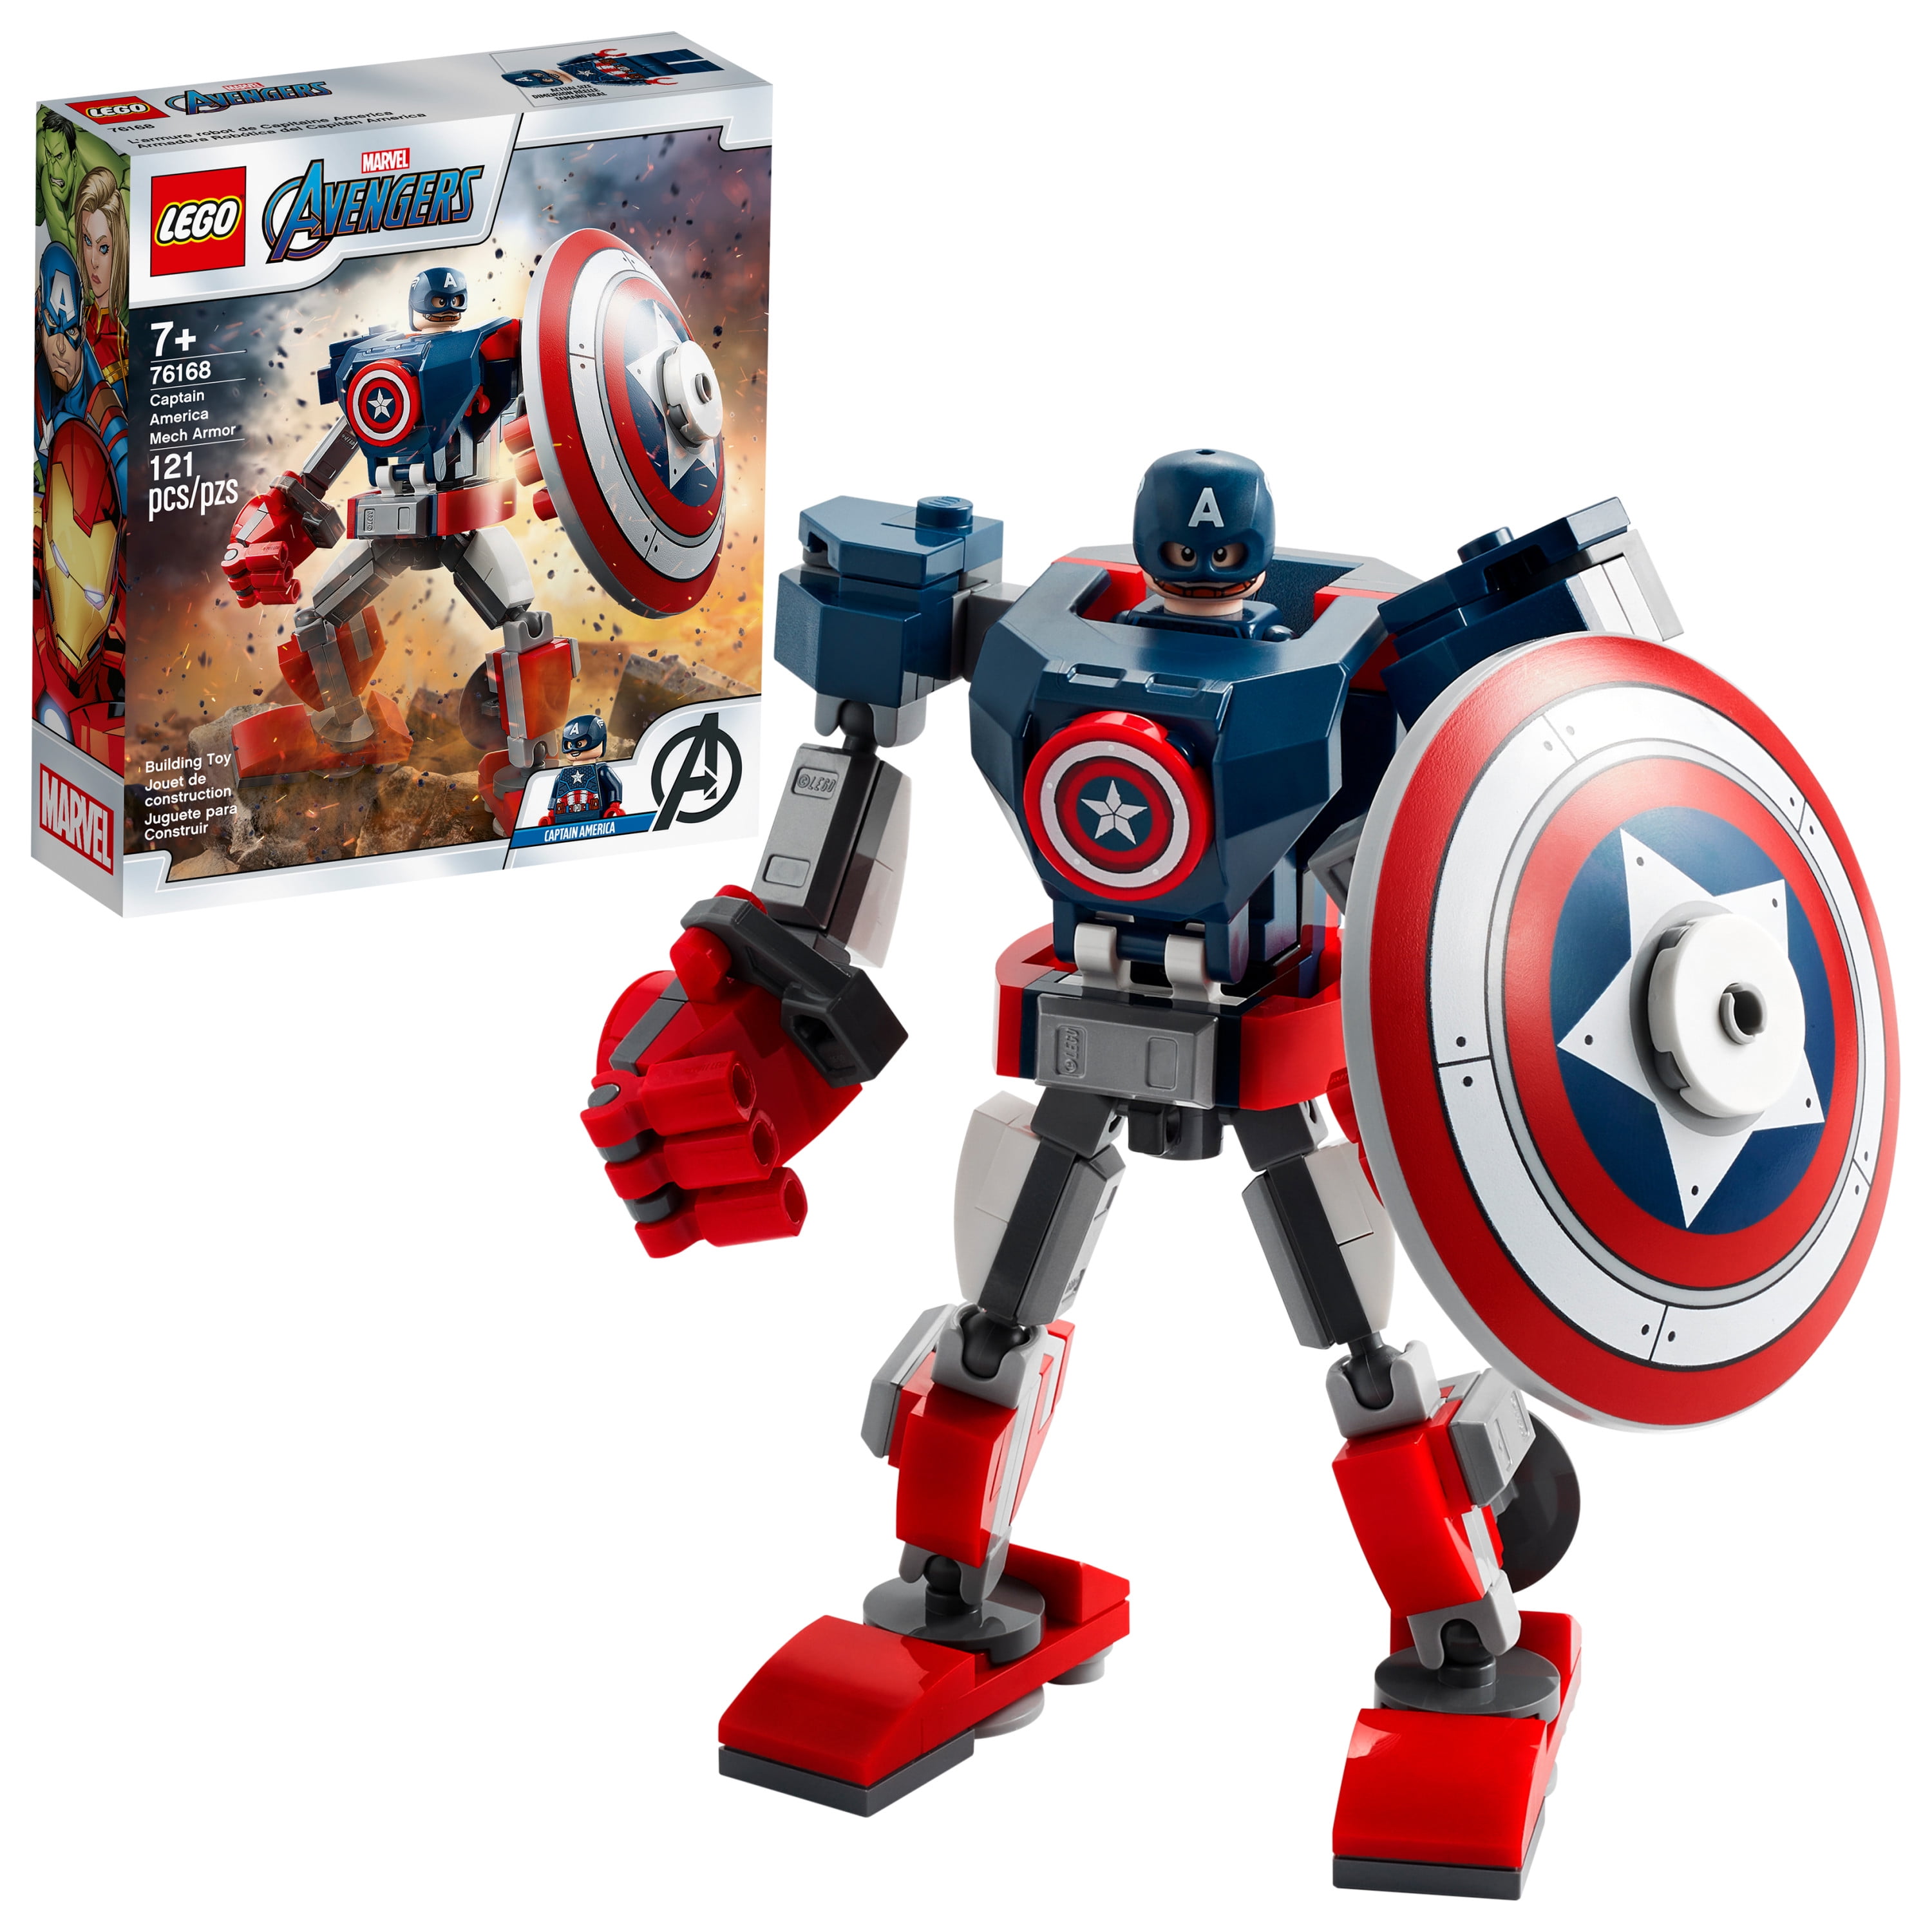 M I Heroes 76164 0799298 for sale online Edificios Lego Iron Man Hulkbuster contra agente A 